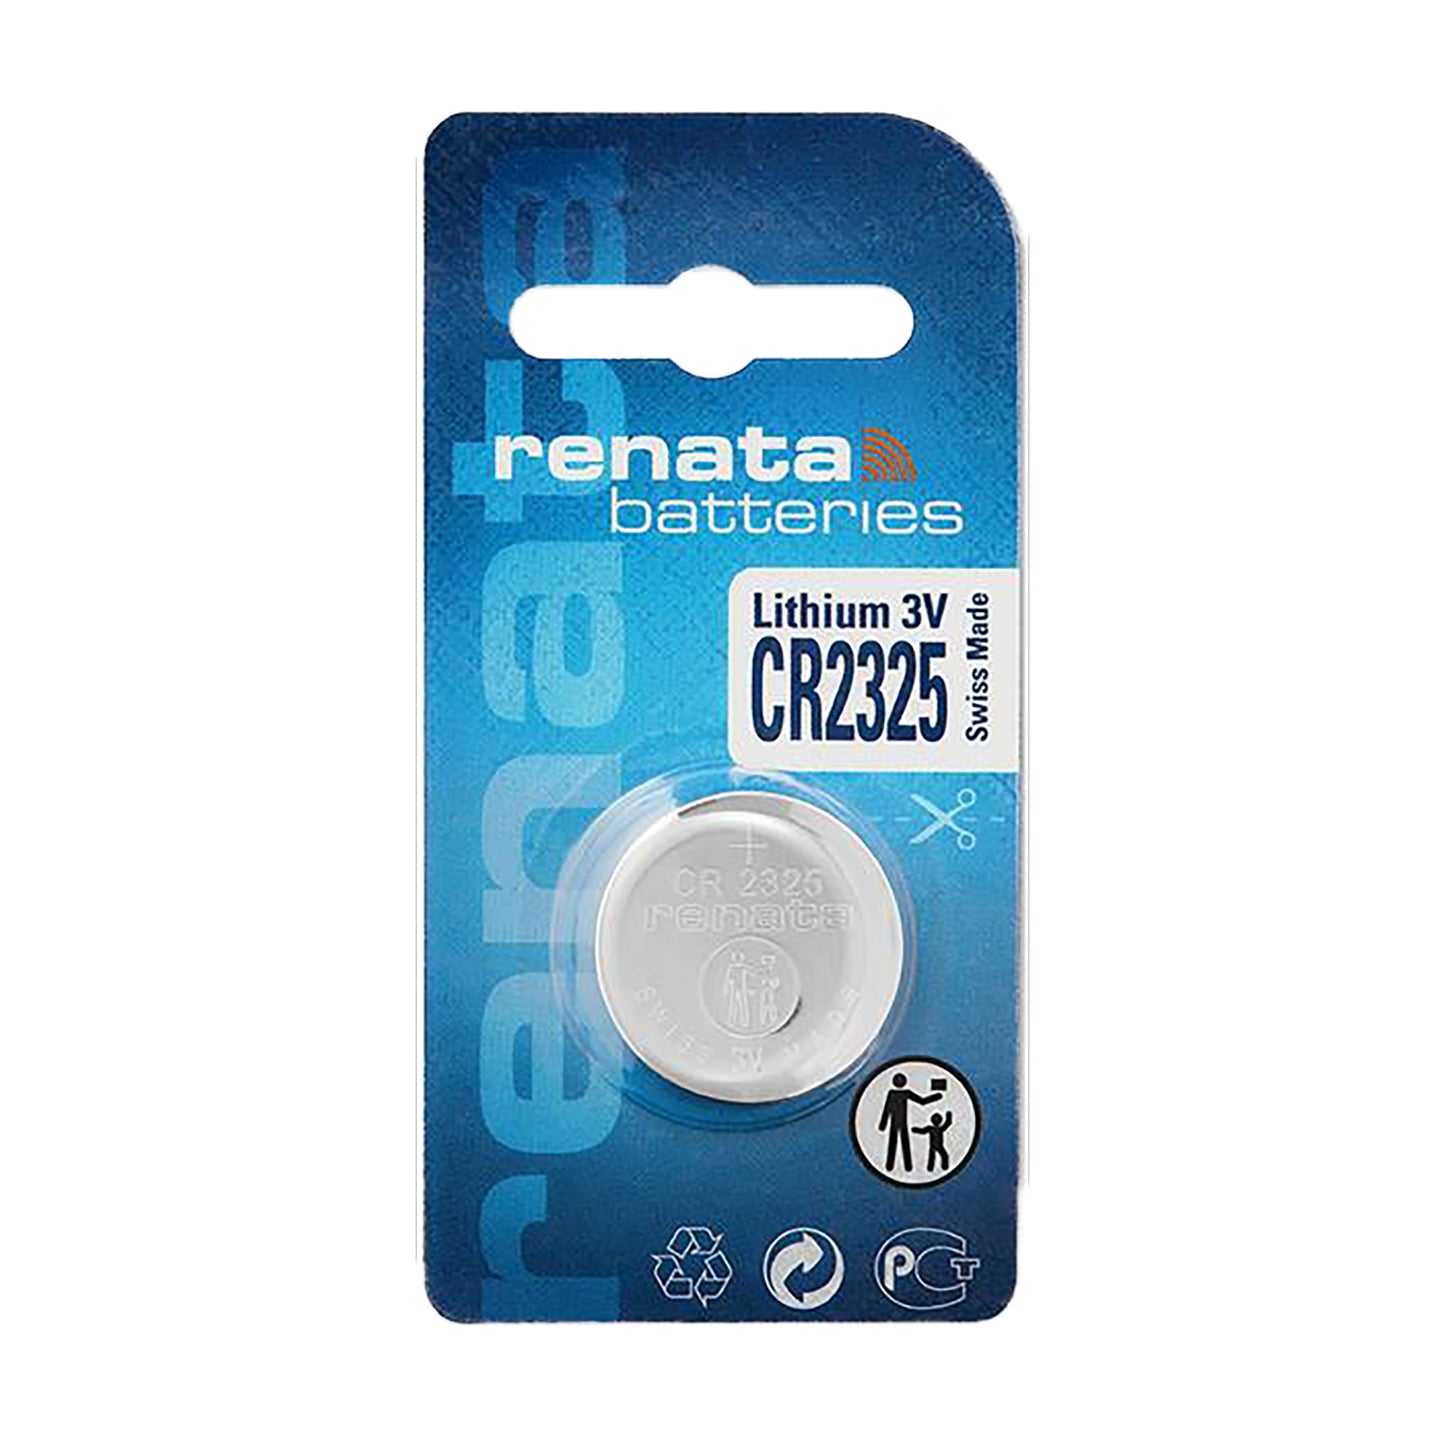 REN-CR2325-1 - литиевая батарейка Renata CR2325, 3 В (1 шт. в блистере)